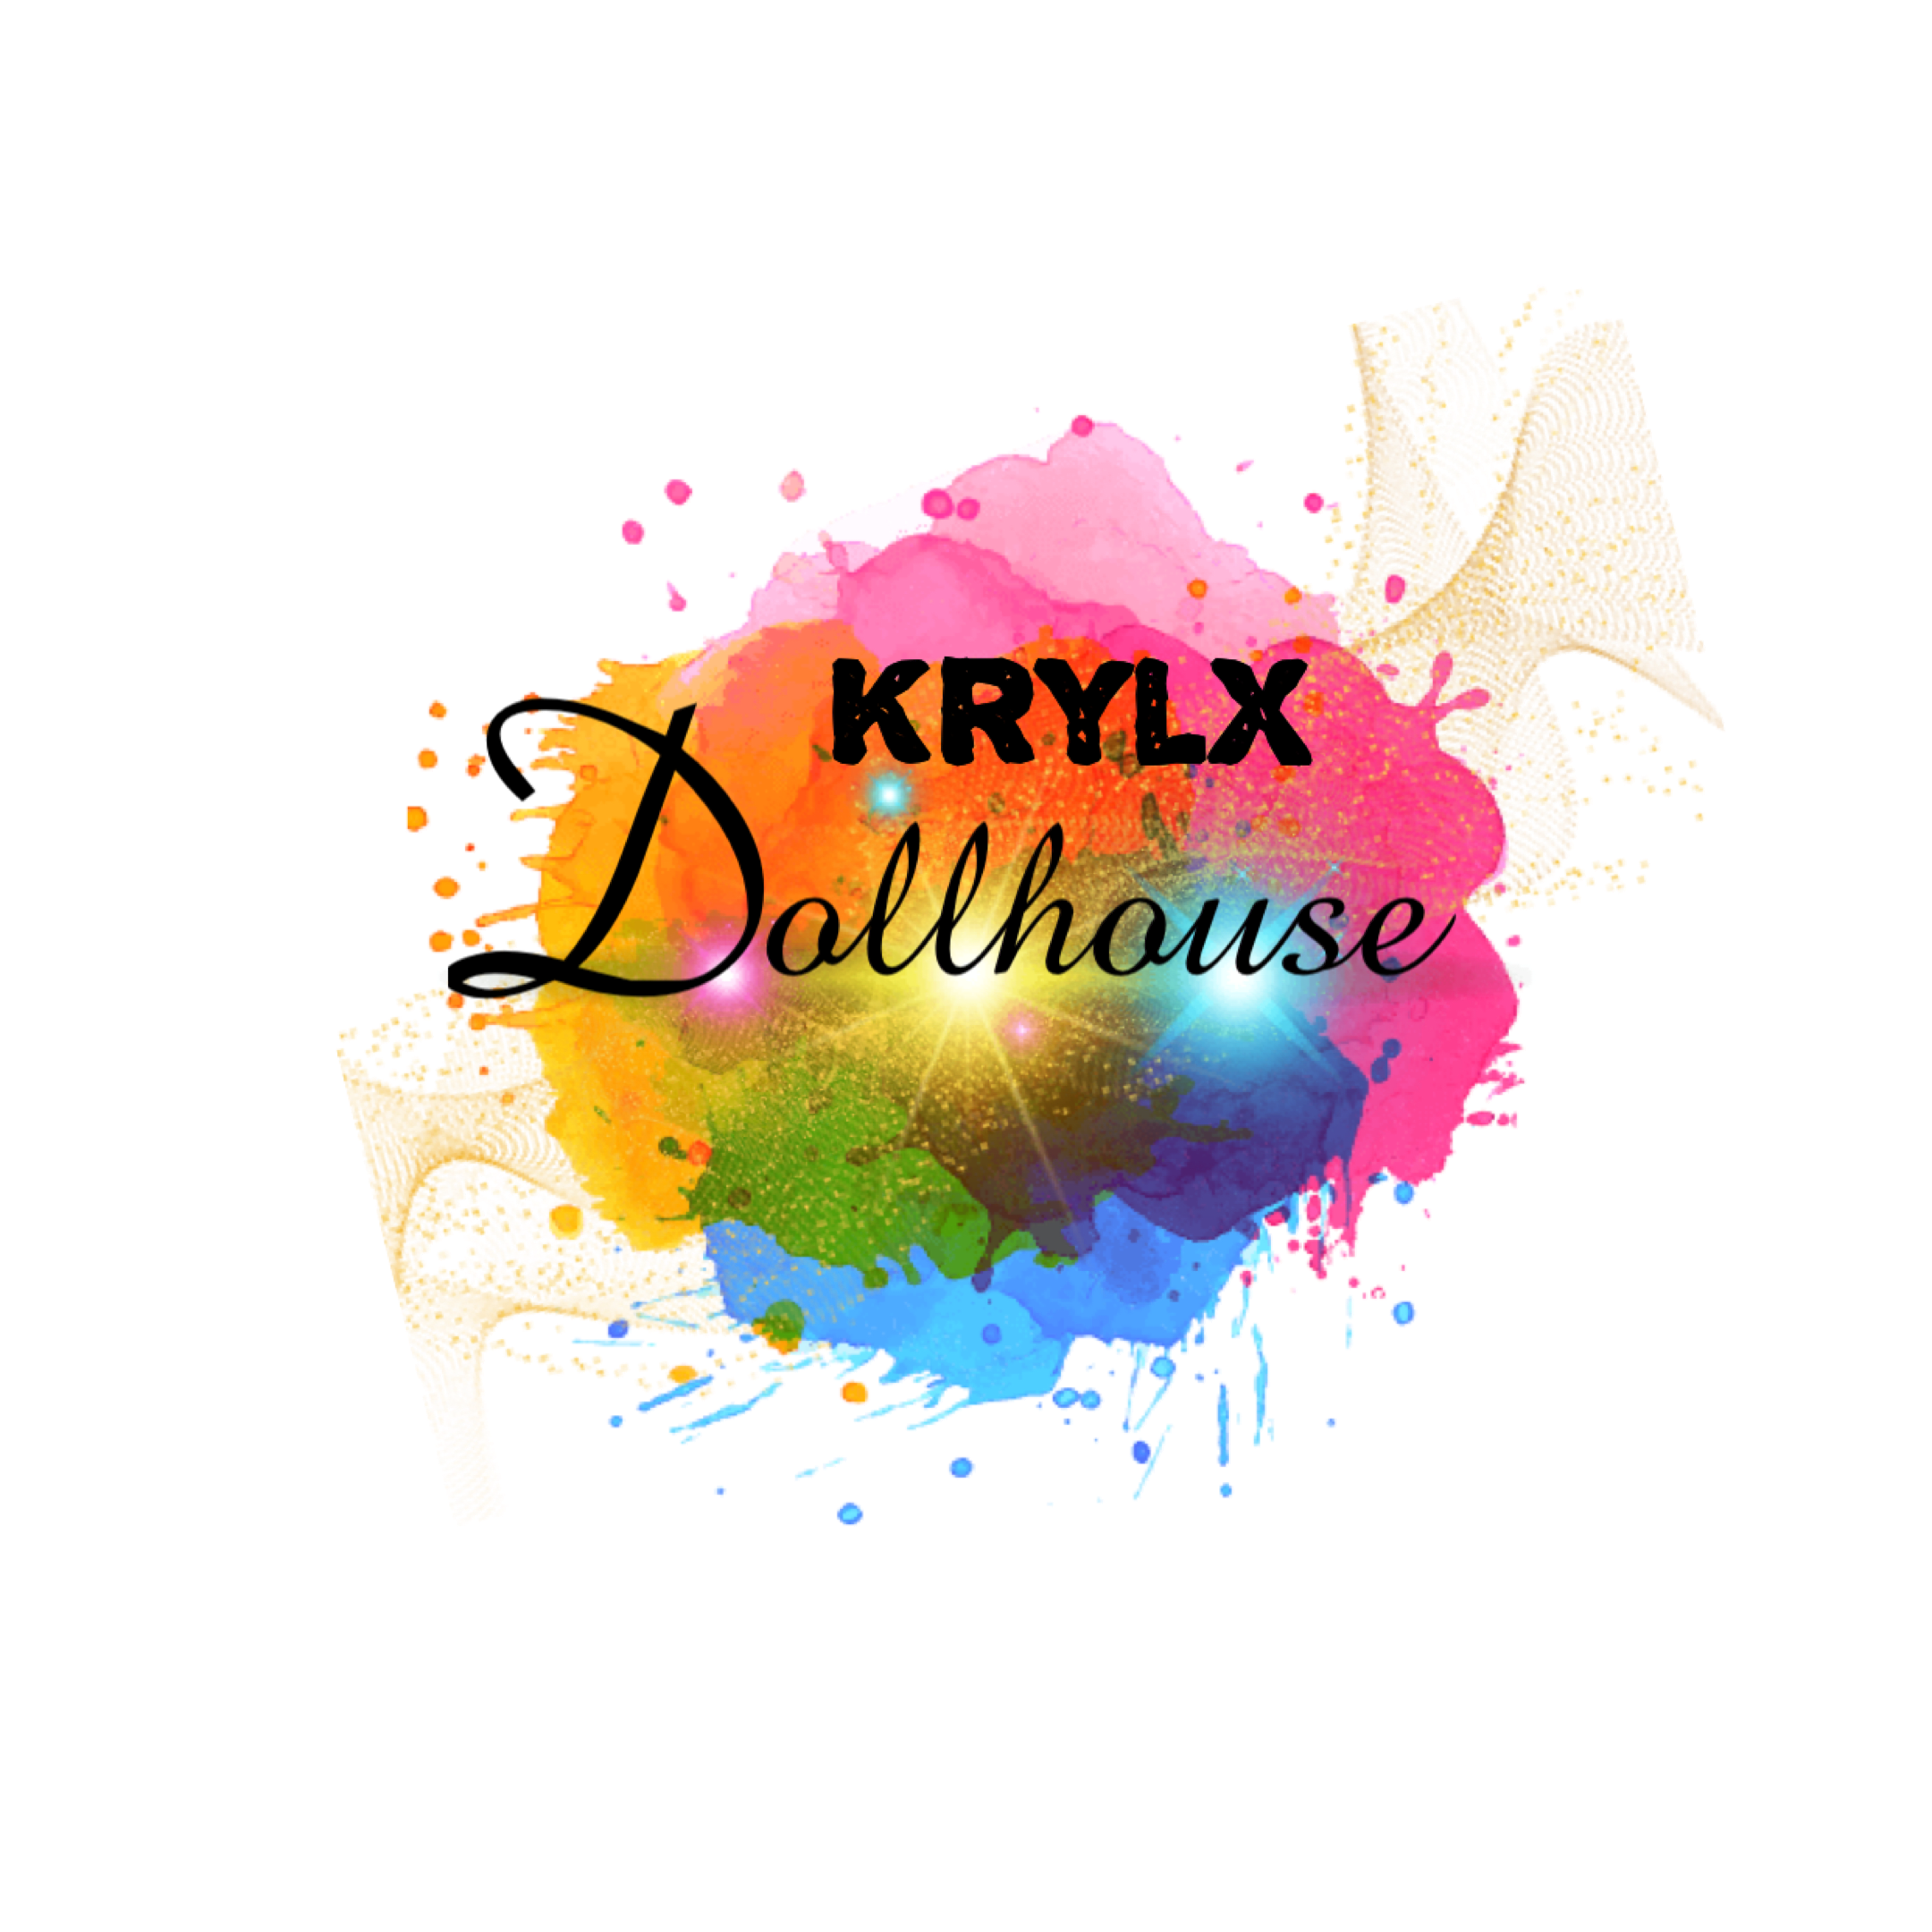 Krylx Dollhouse